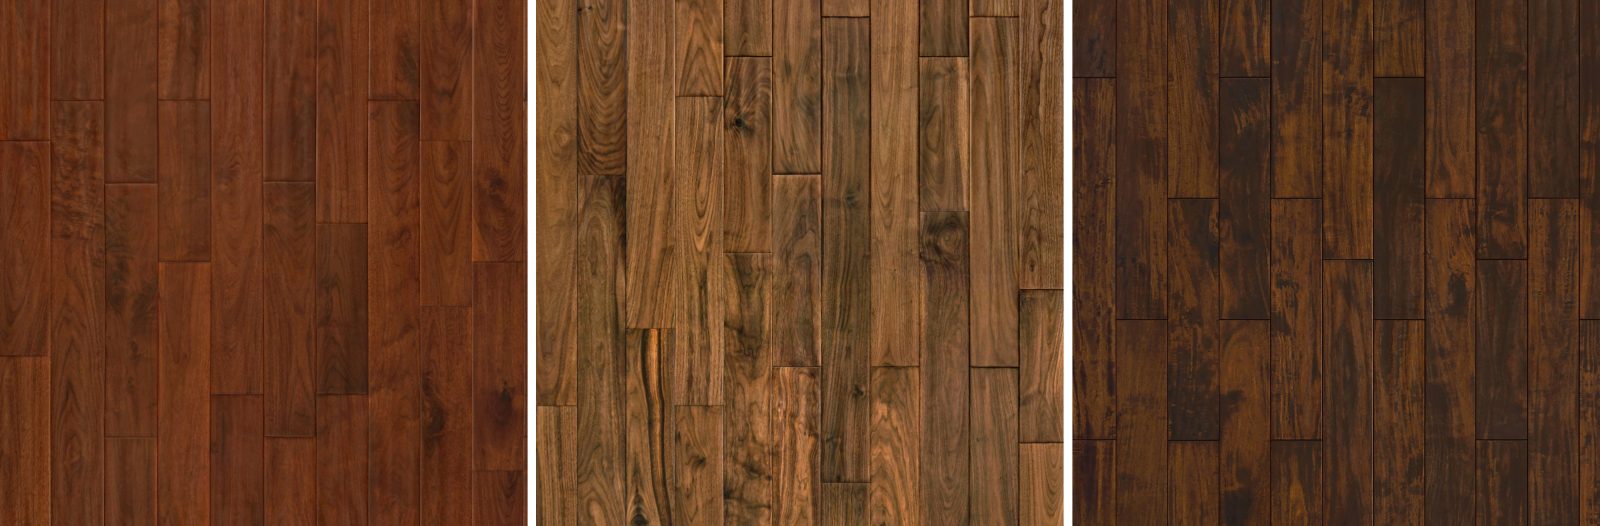 Comparison of Walnut Hardwood Flooring